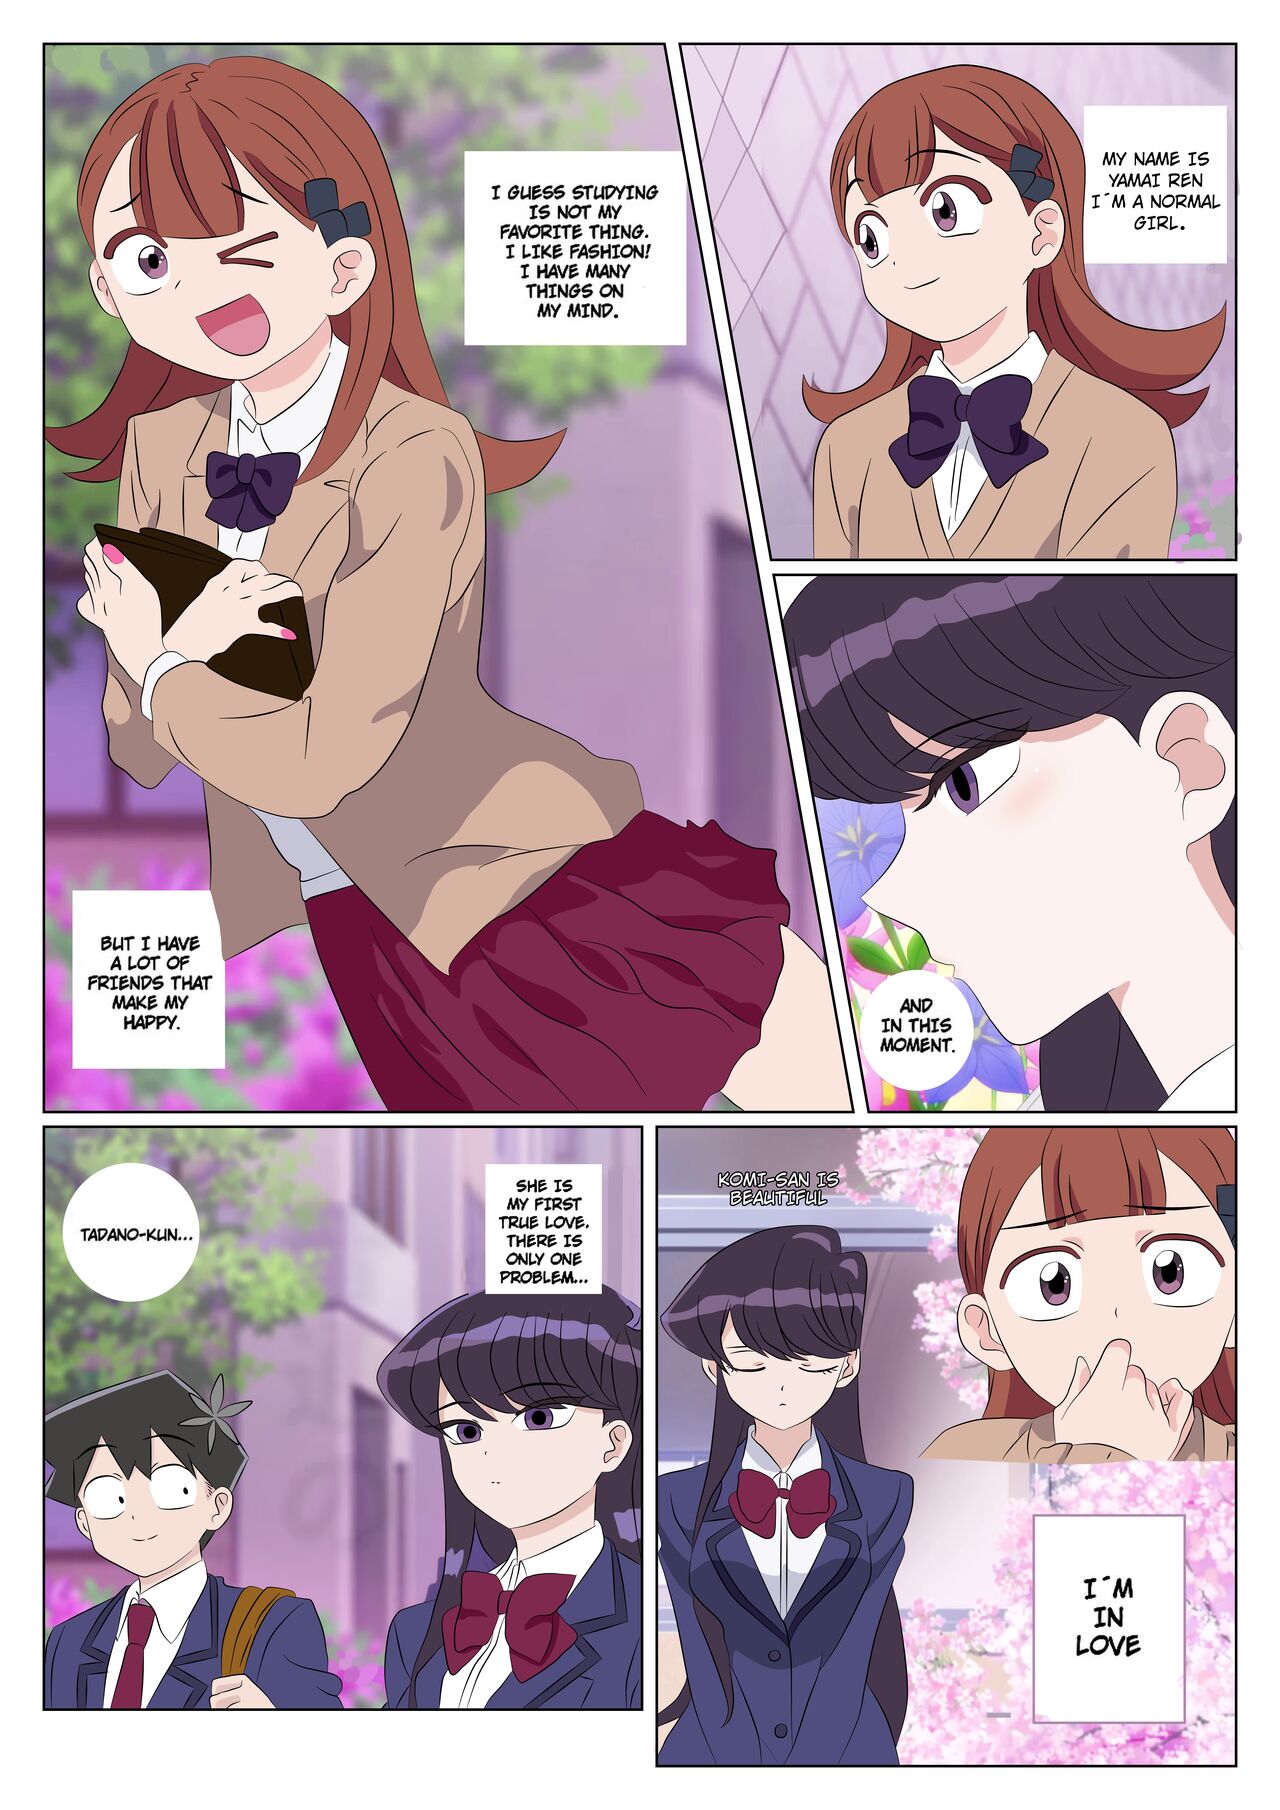 Tadano-kun can't cum alone 1 - Page 4 - HentaiEra